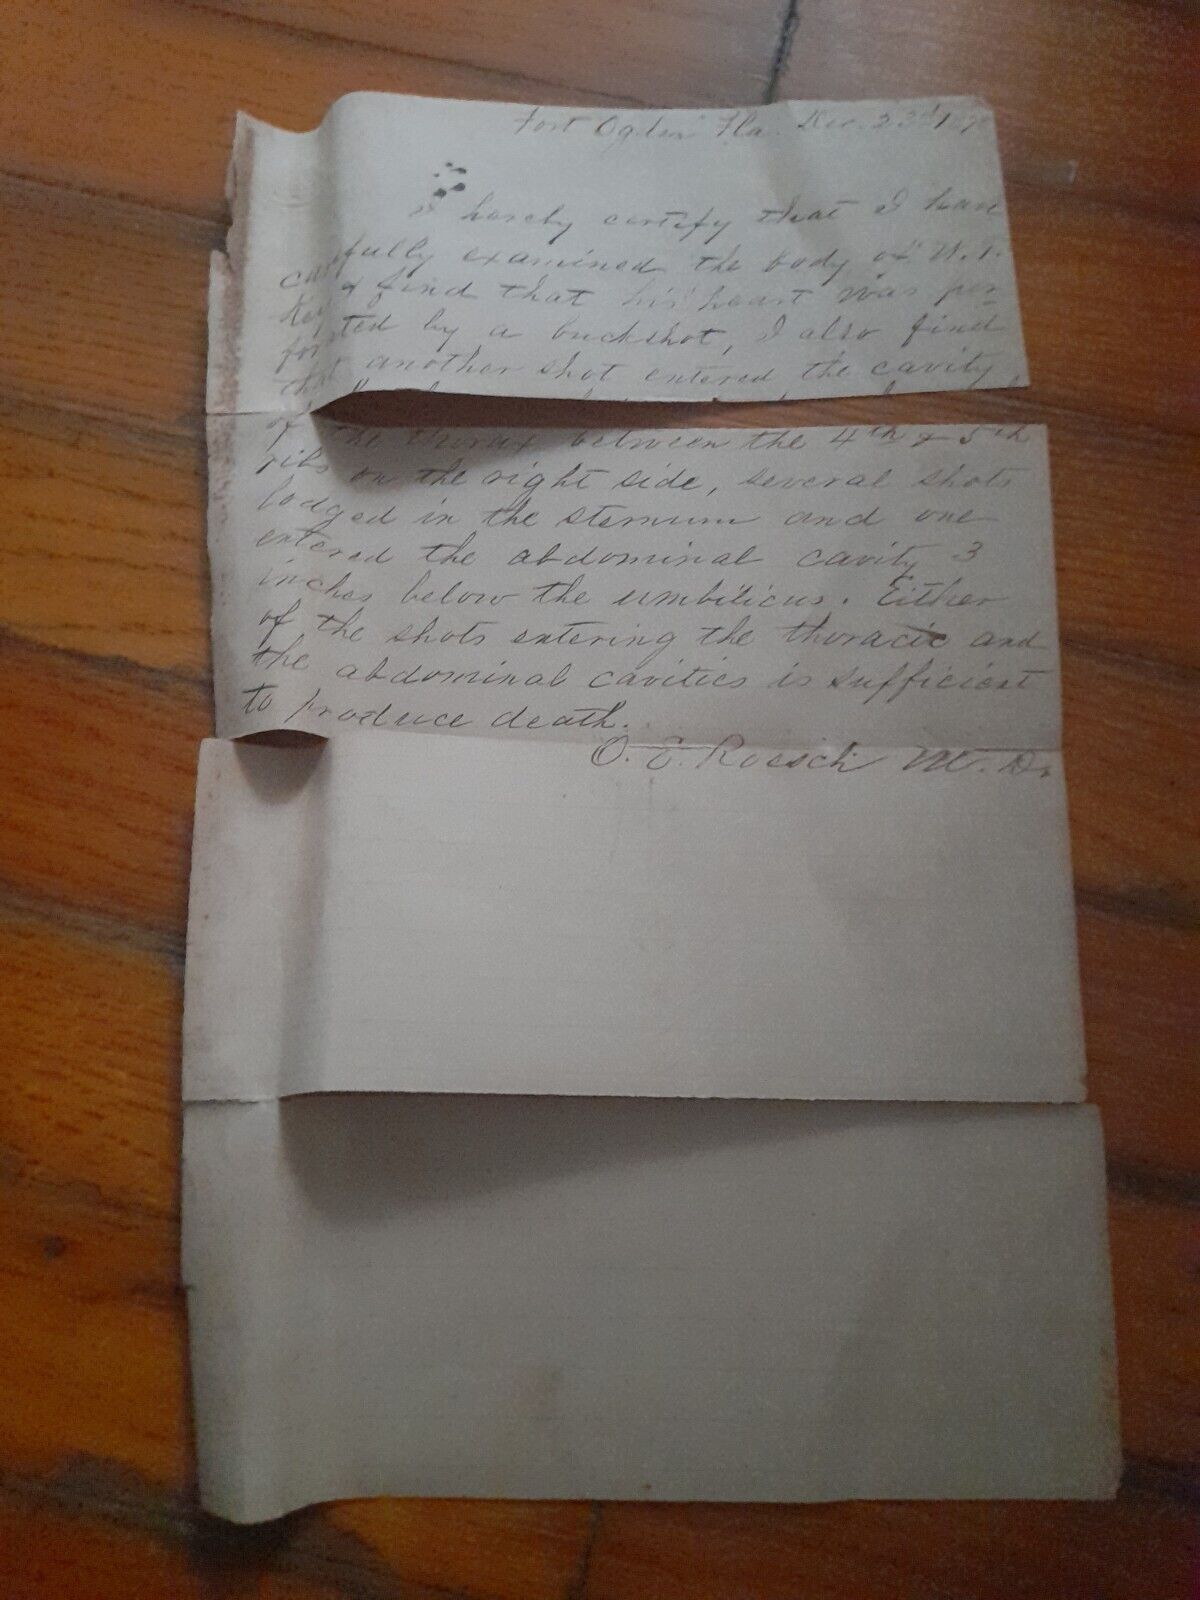 Congress Death Note Dec 23 1878 Vintage antique death note confirm